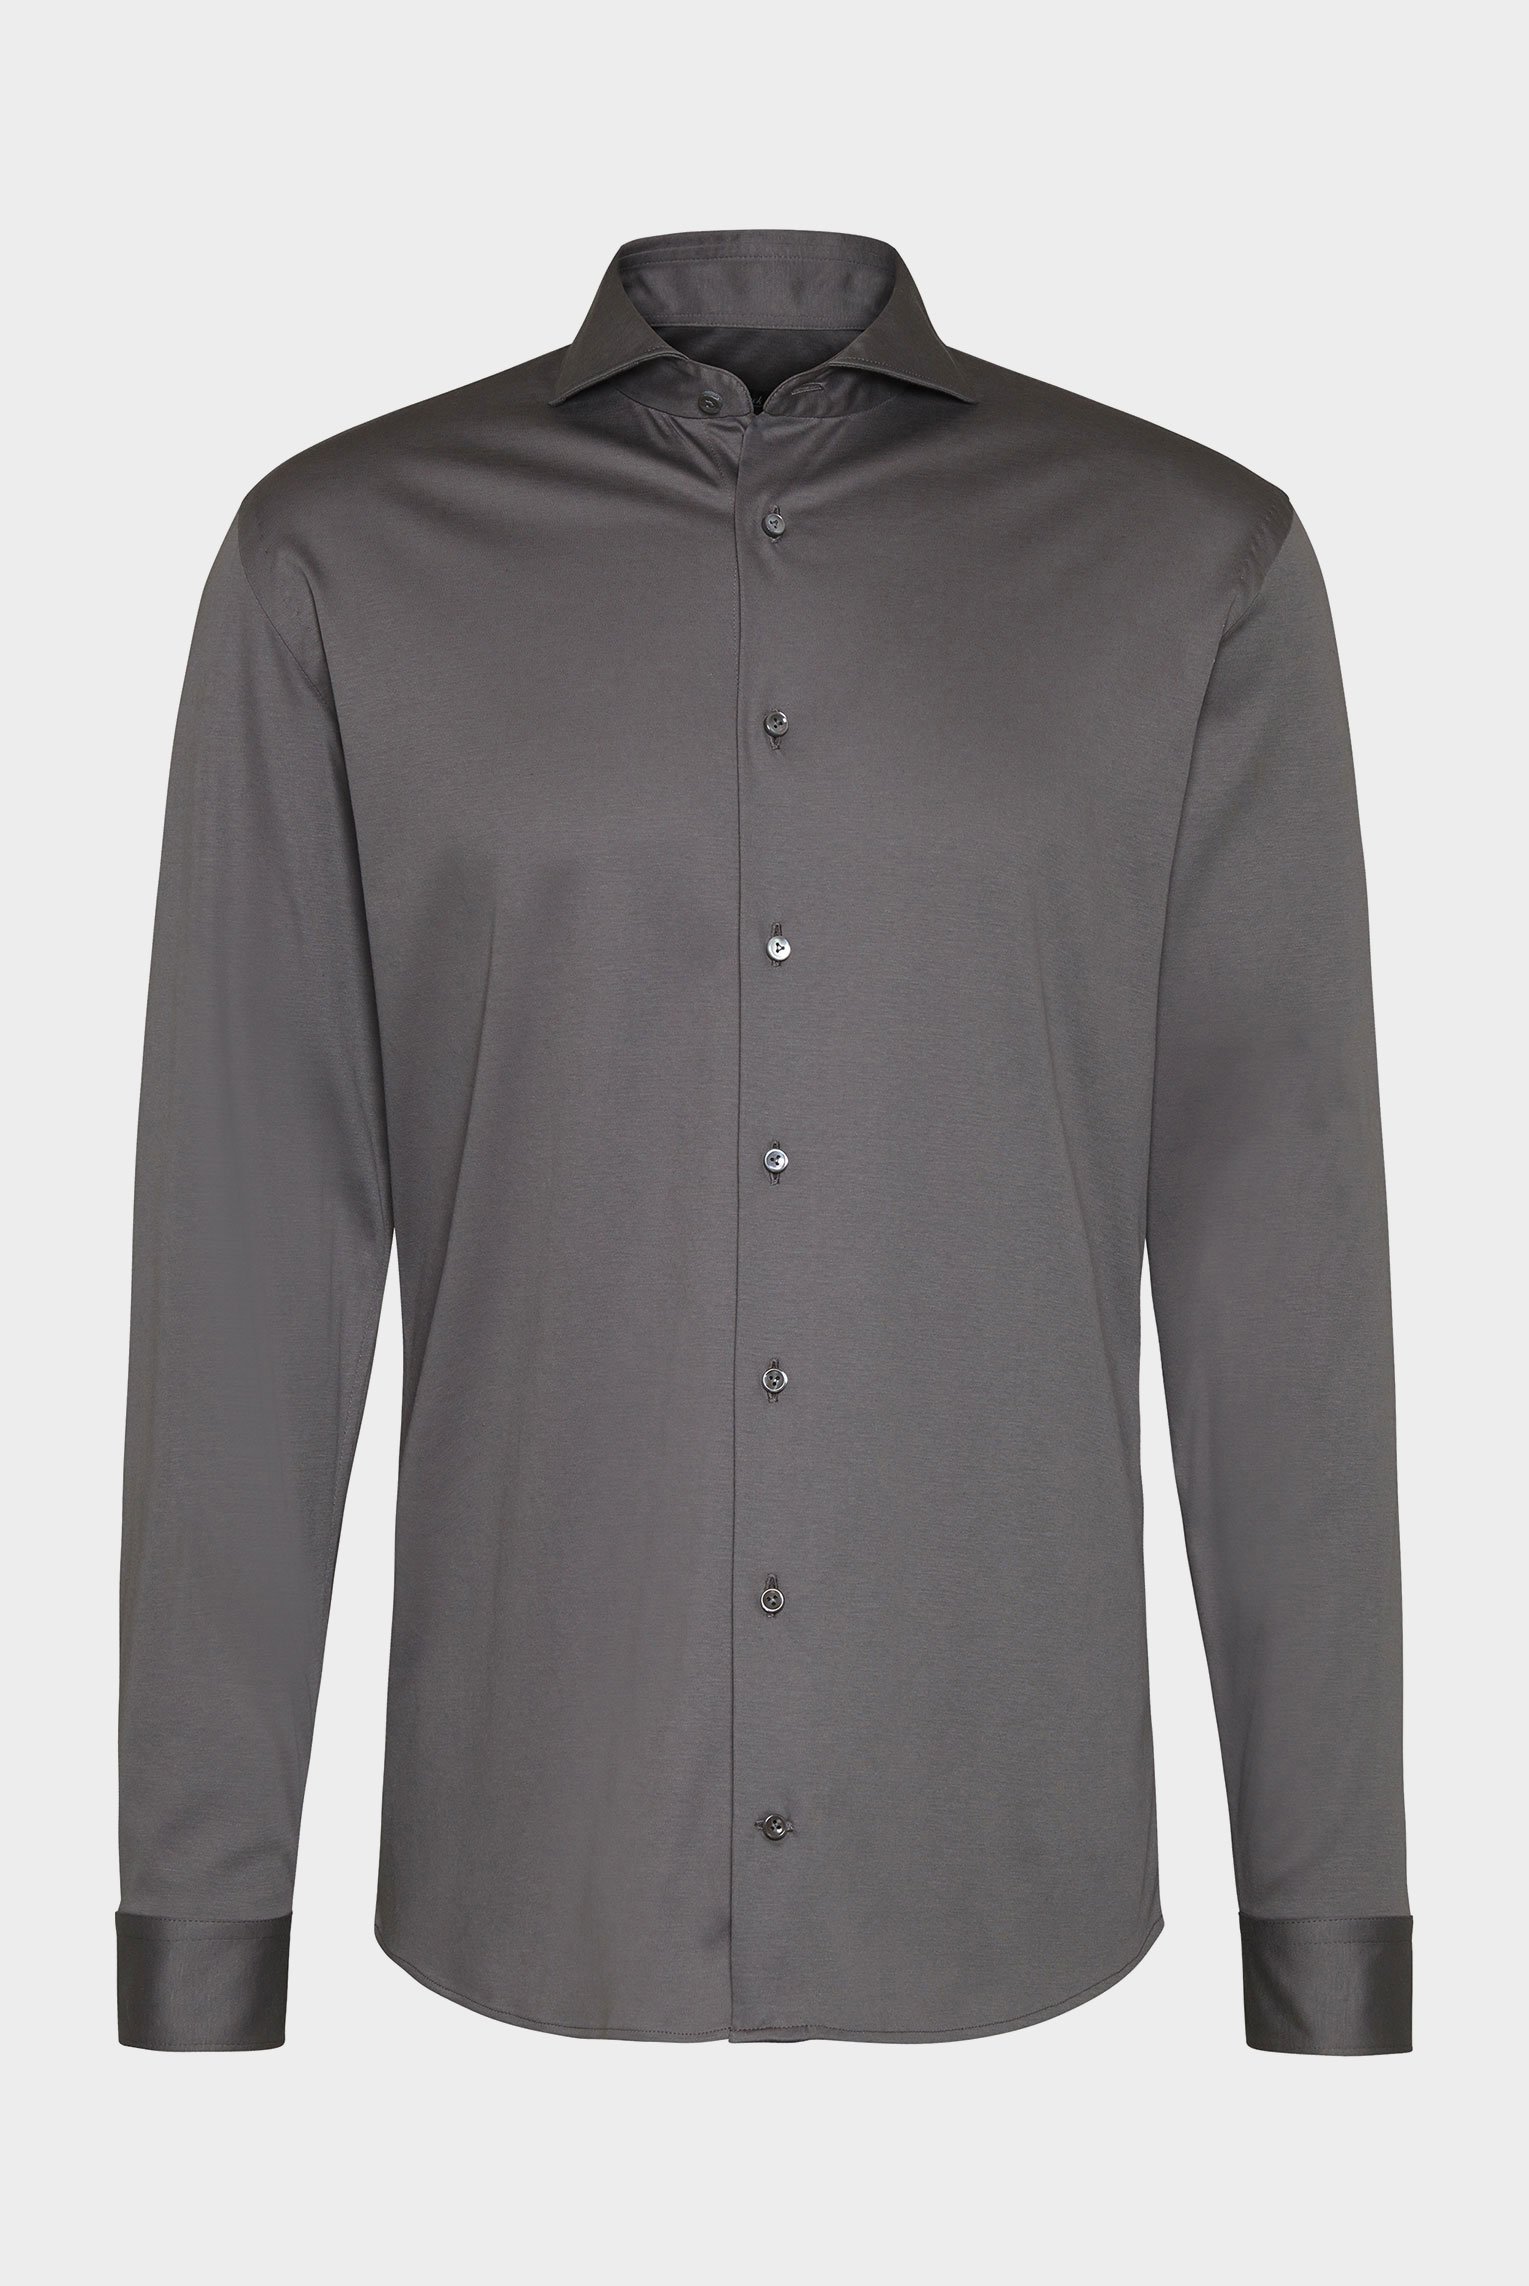 Casual Hemden+Jersey Hemd aus Schweizer Baumwolle Tailor Fit+20.1683.UC.180031.070.X4L